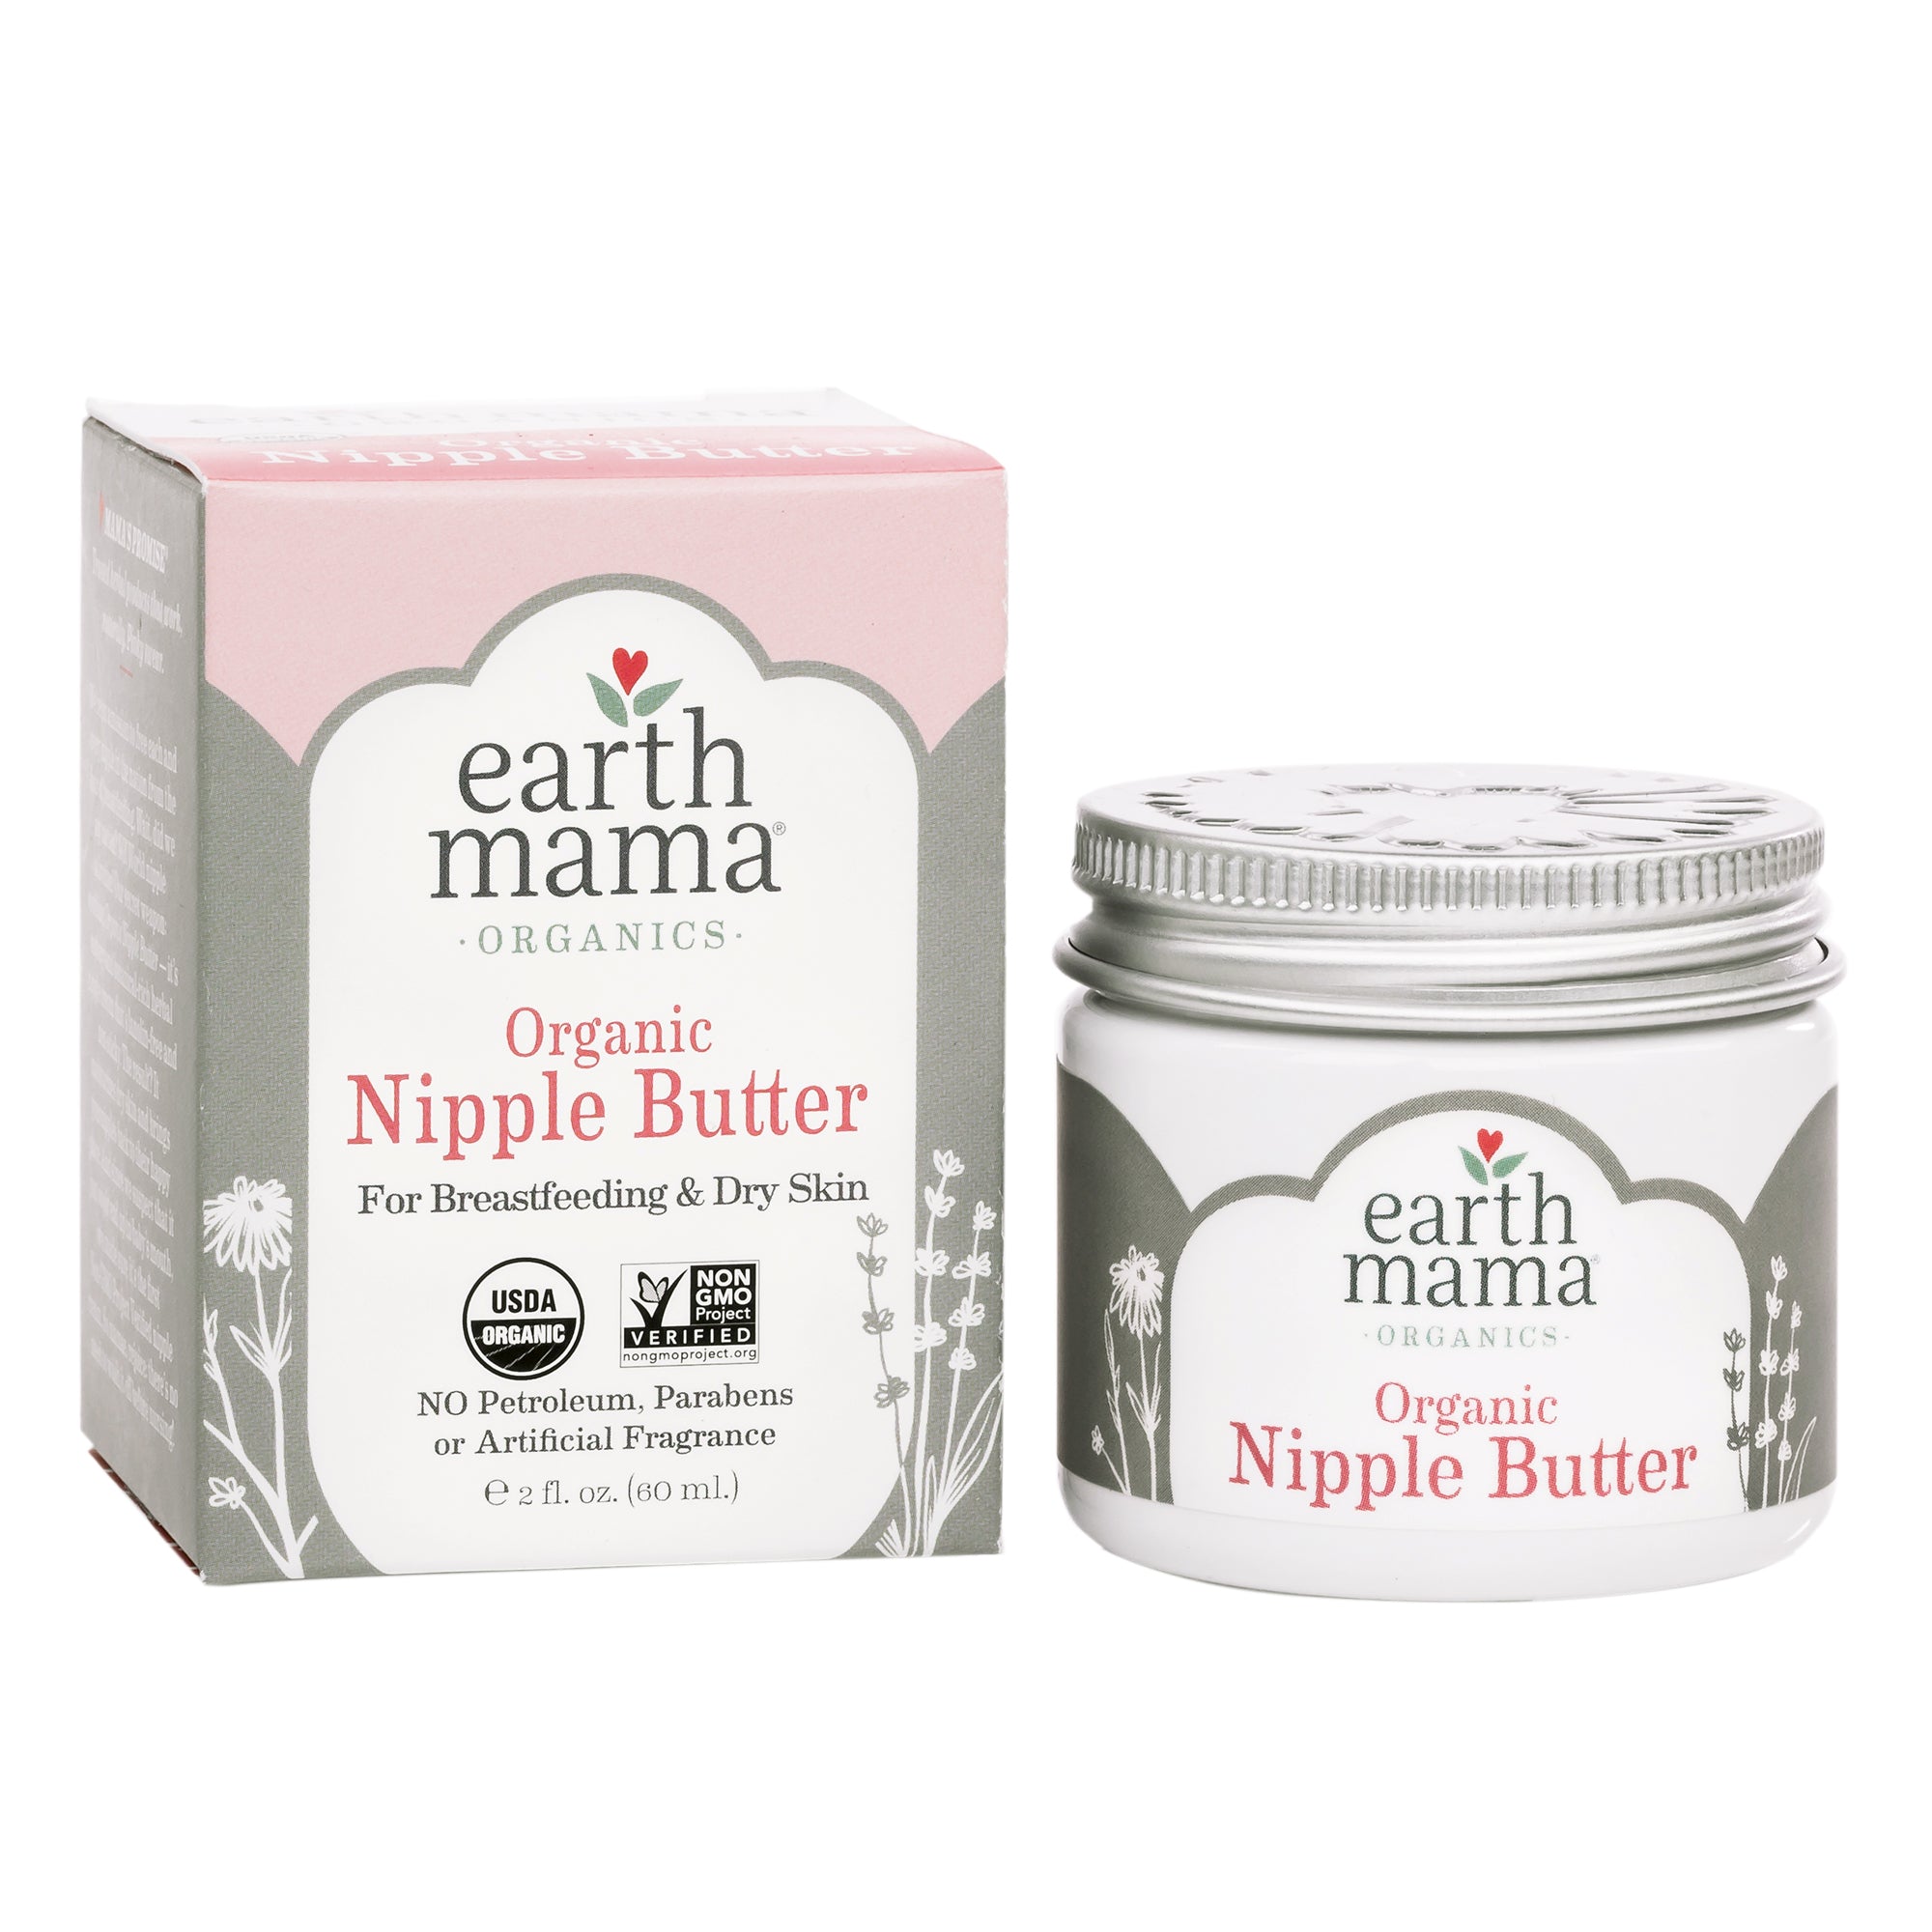  Earth Mama Vegan Nipple Butter